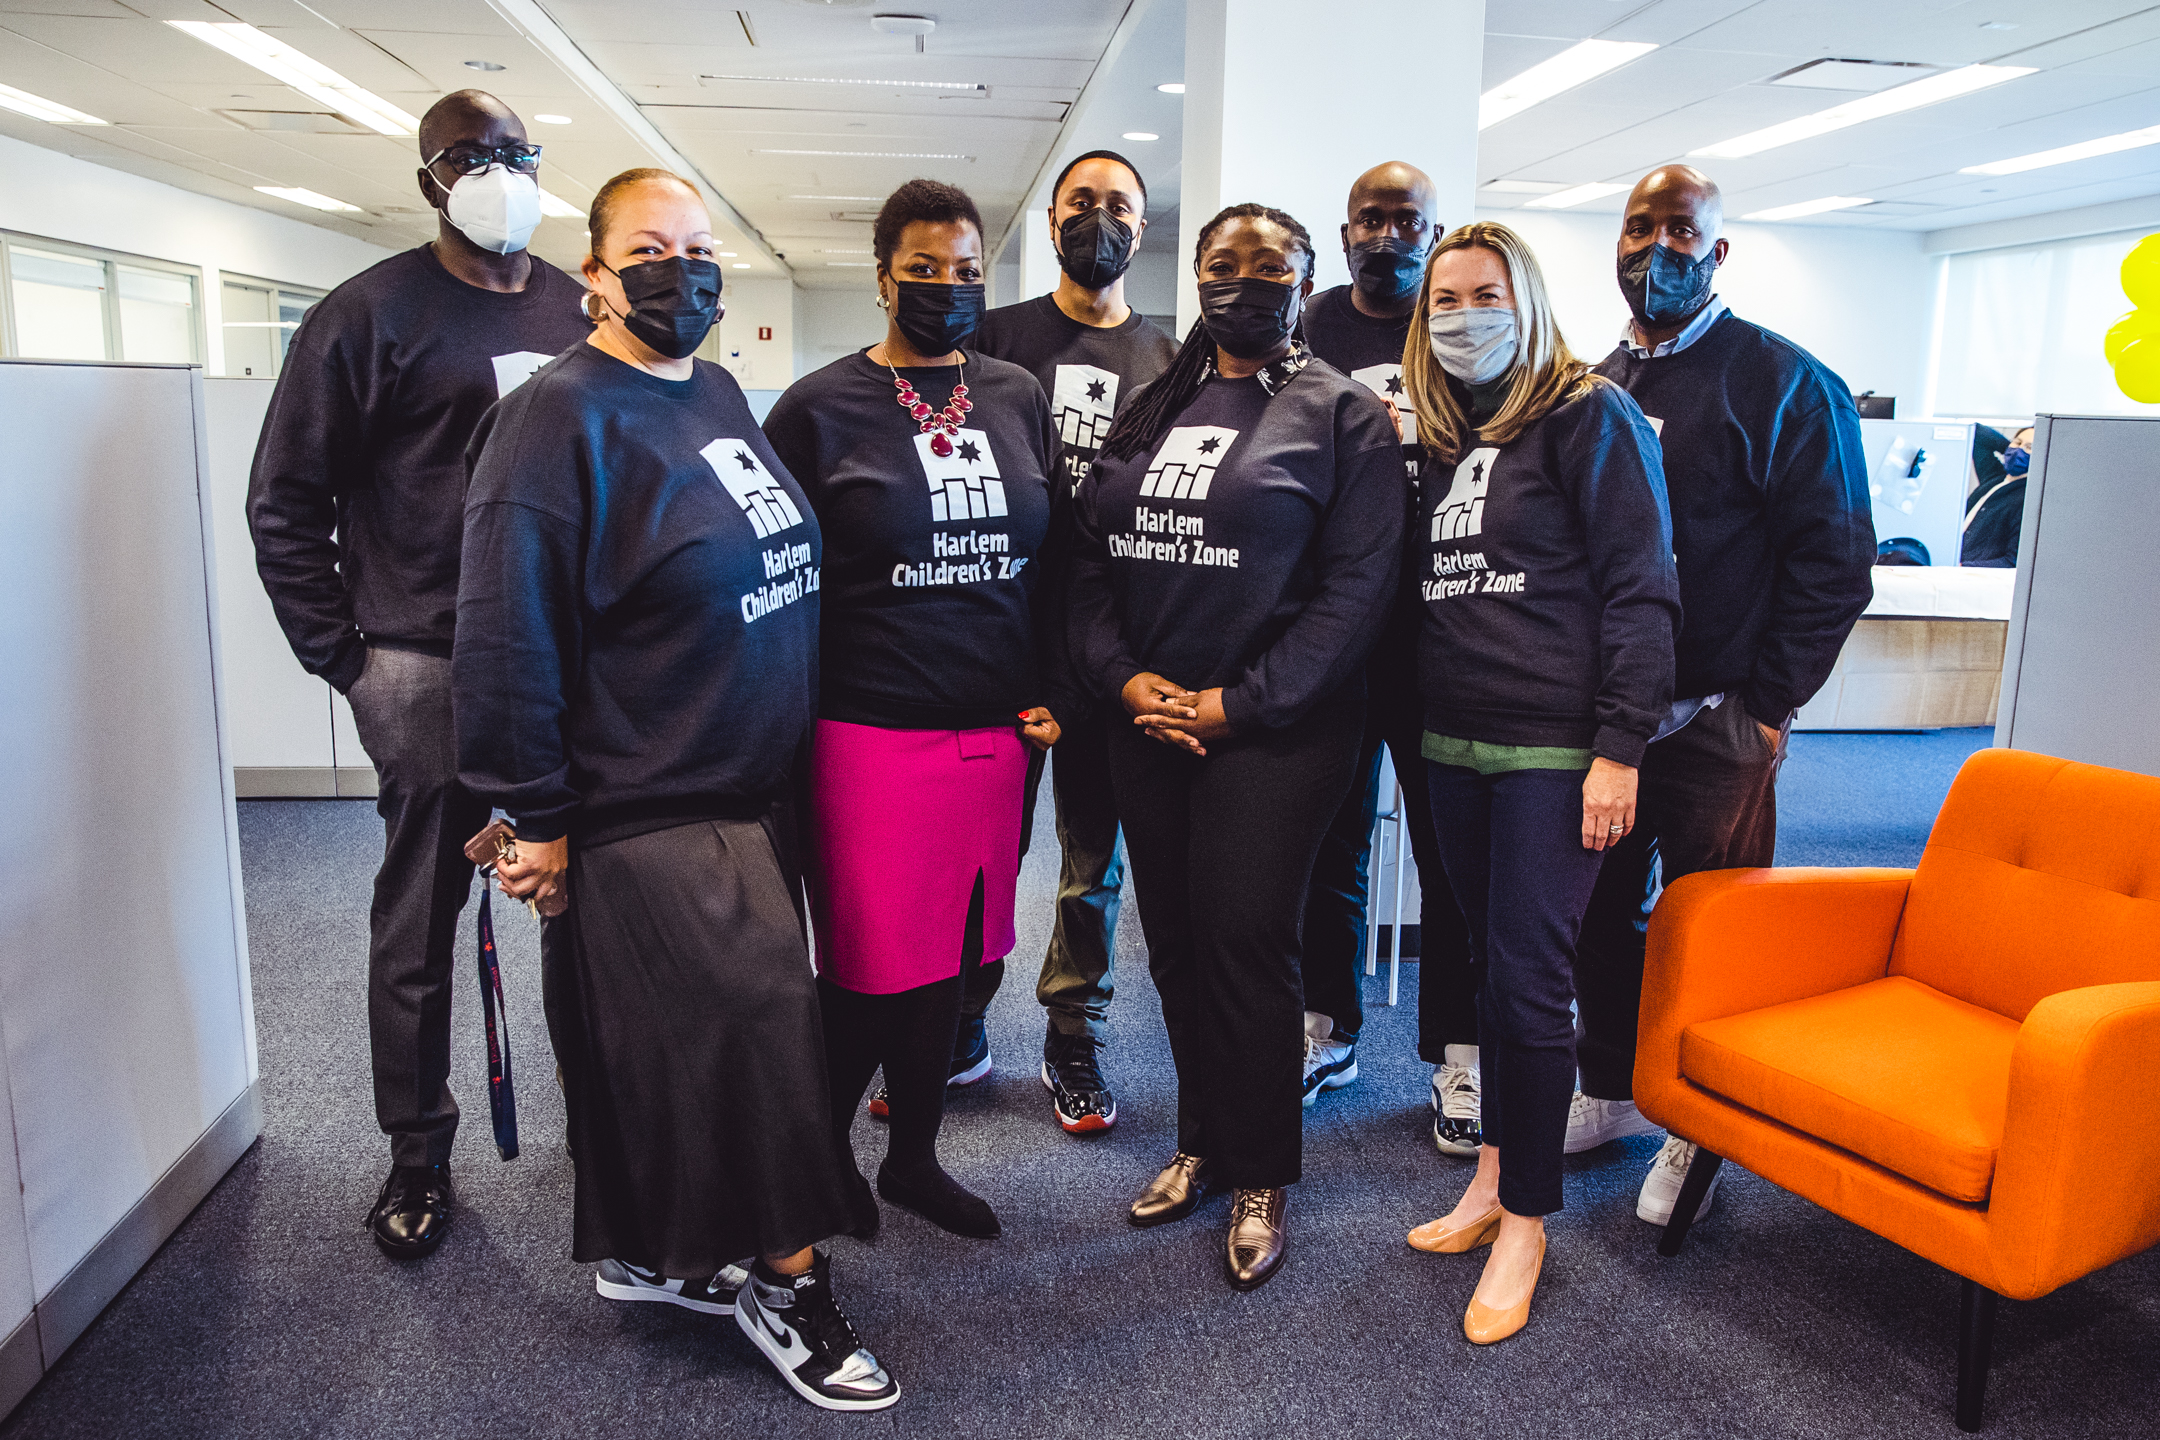 Eight people wearing black Harlem Children's Zone sweatshirts